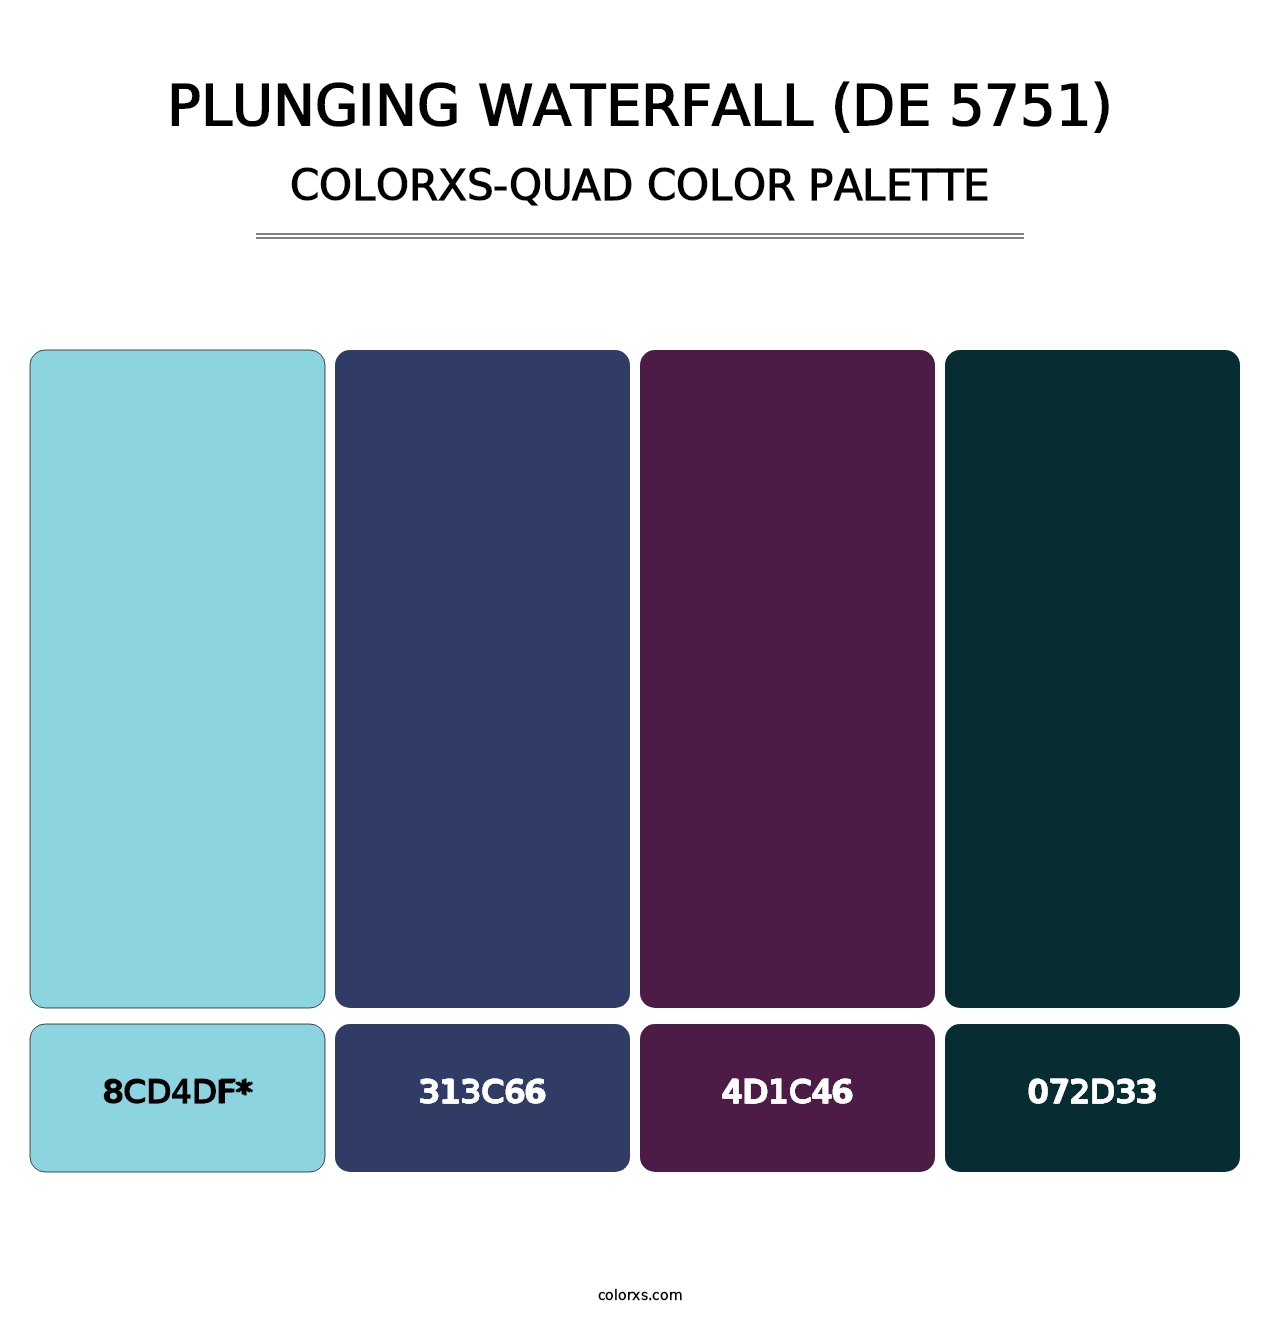 Plunging Waterfall (DE 5751) - Colorxs Quad Palette